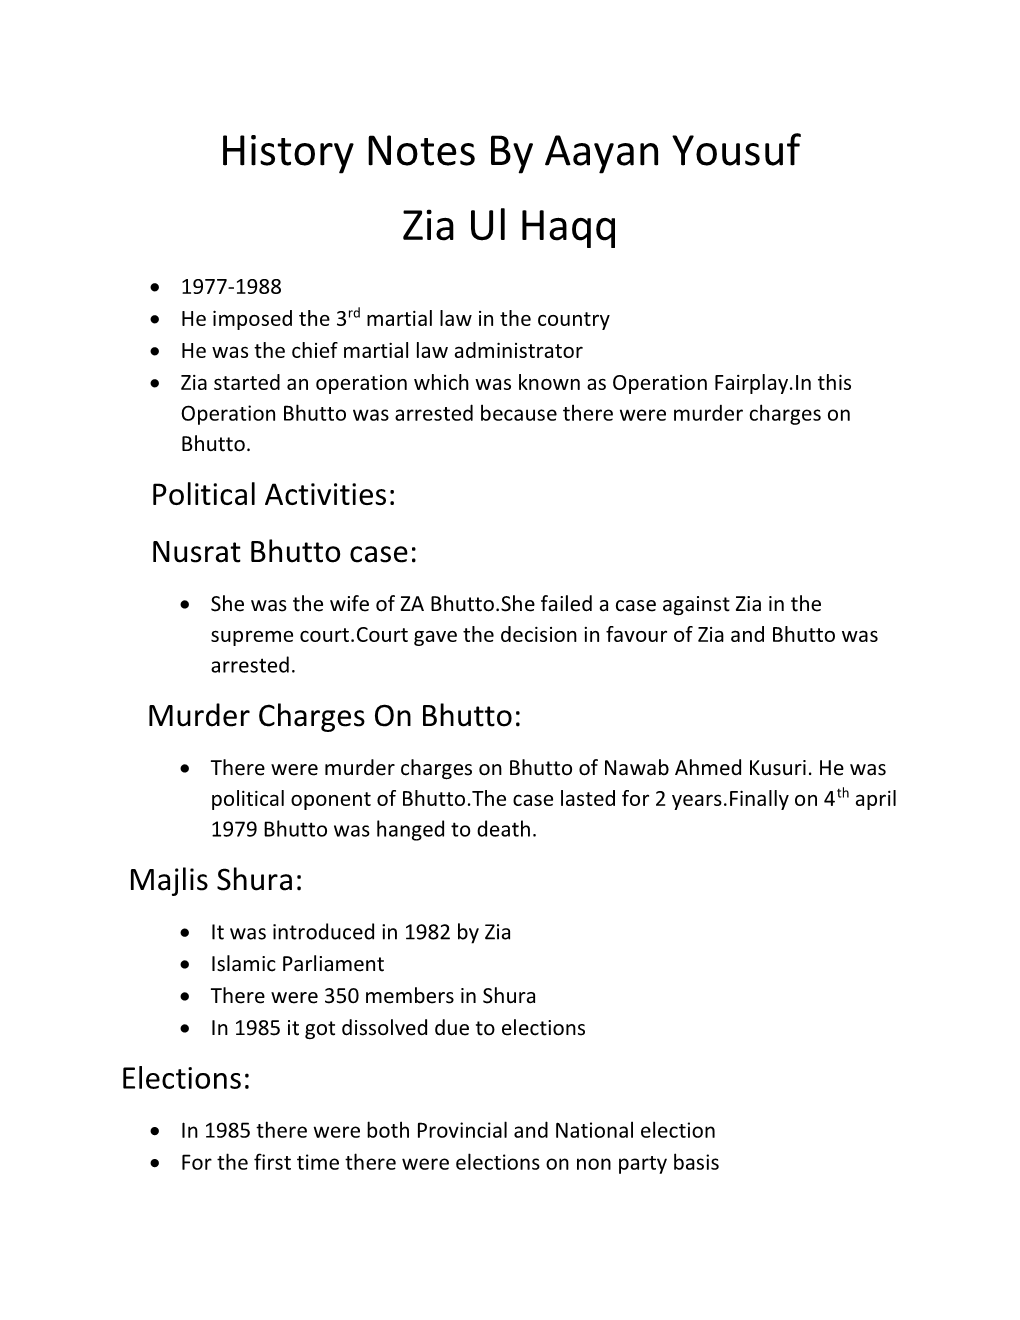 History Notes by Aayan Yousuf Zia Ul Haqq